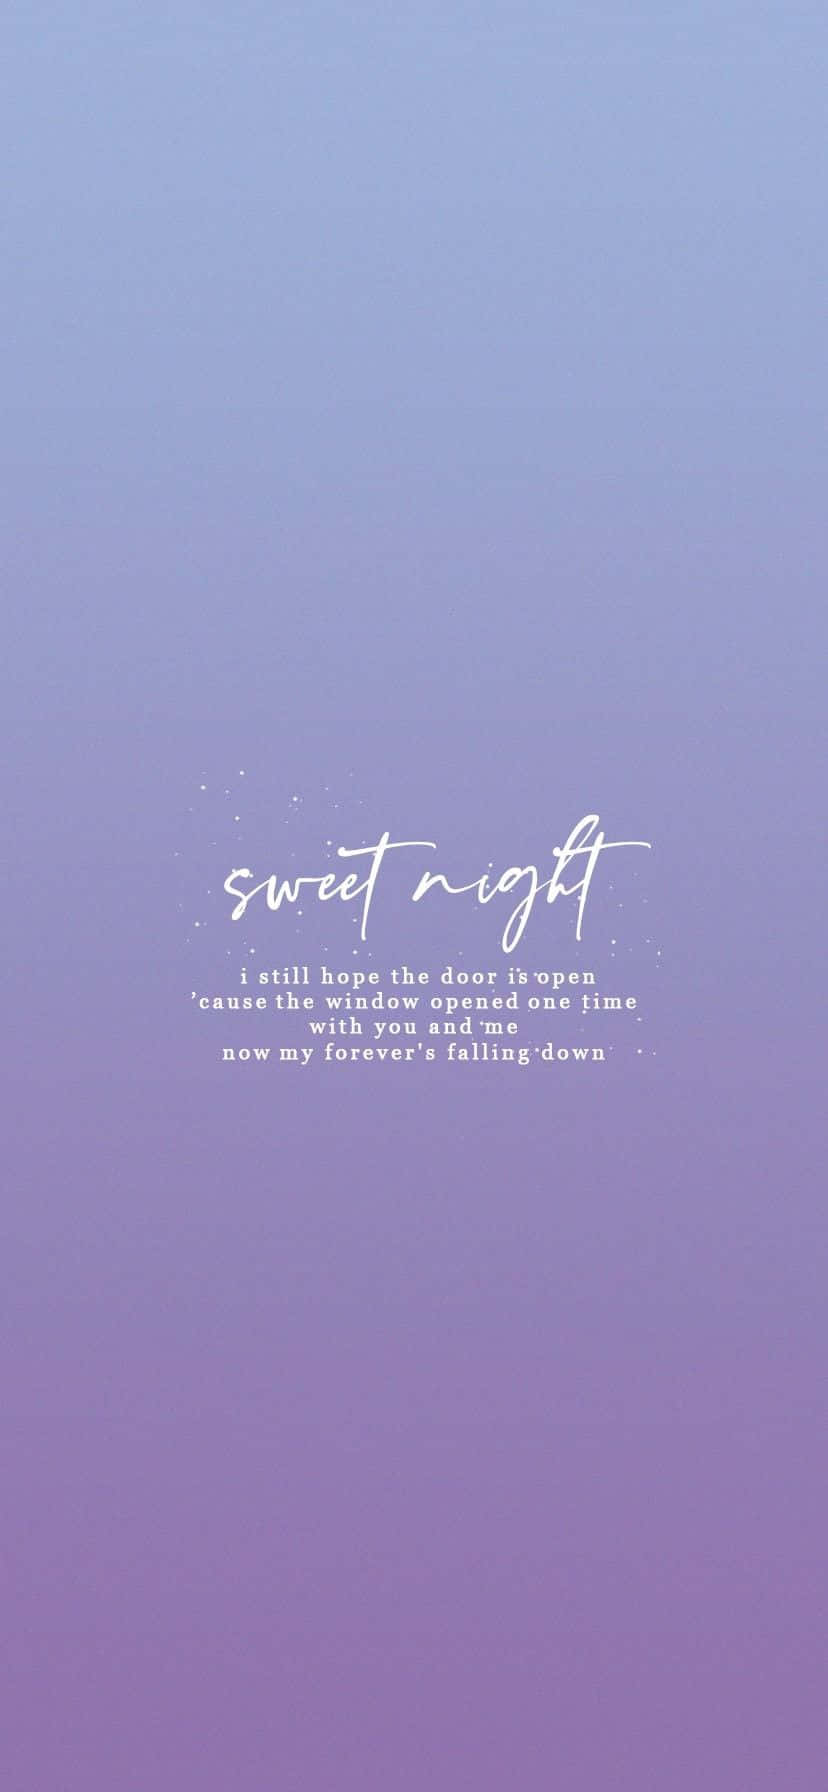 SWEET Night FANART  Sweet night, Bts fanart, Bts wallpaper